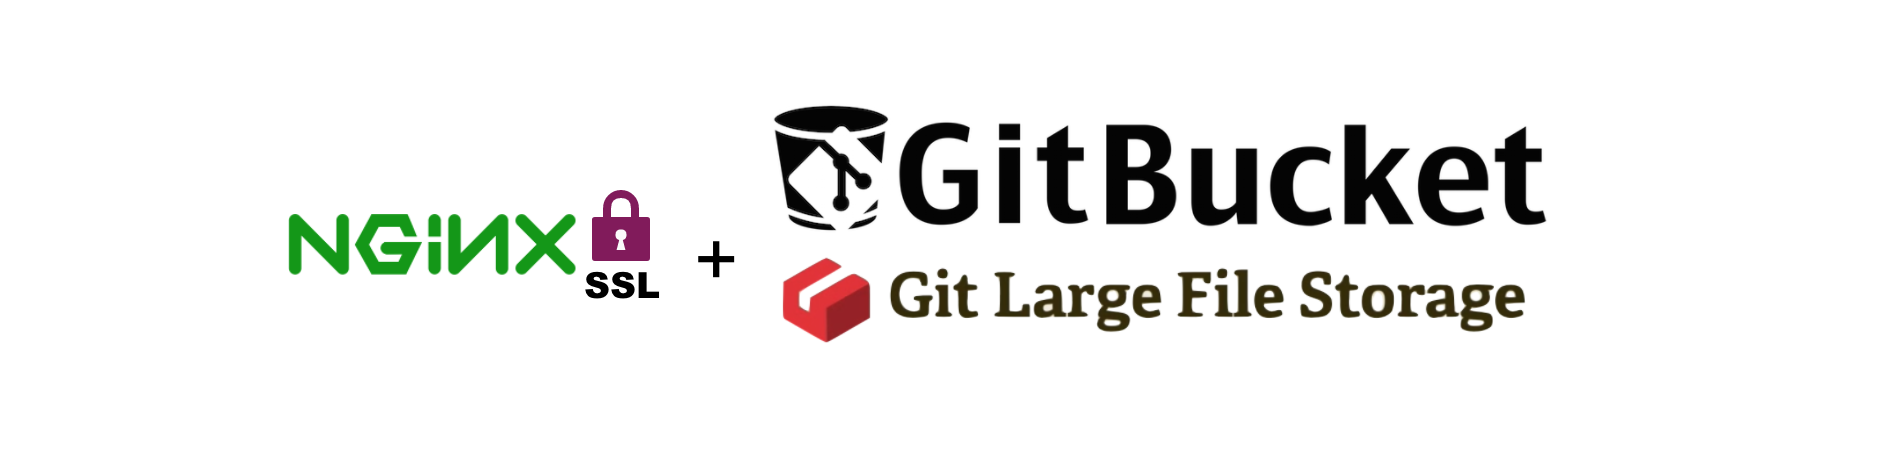 Nginx+SSLクライアント証明書とSSHプロトコルを利用した環境でGitBucketのGitLFSを使うには